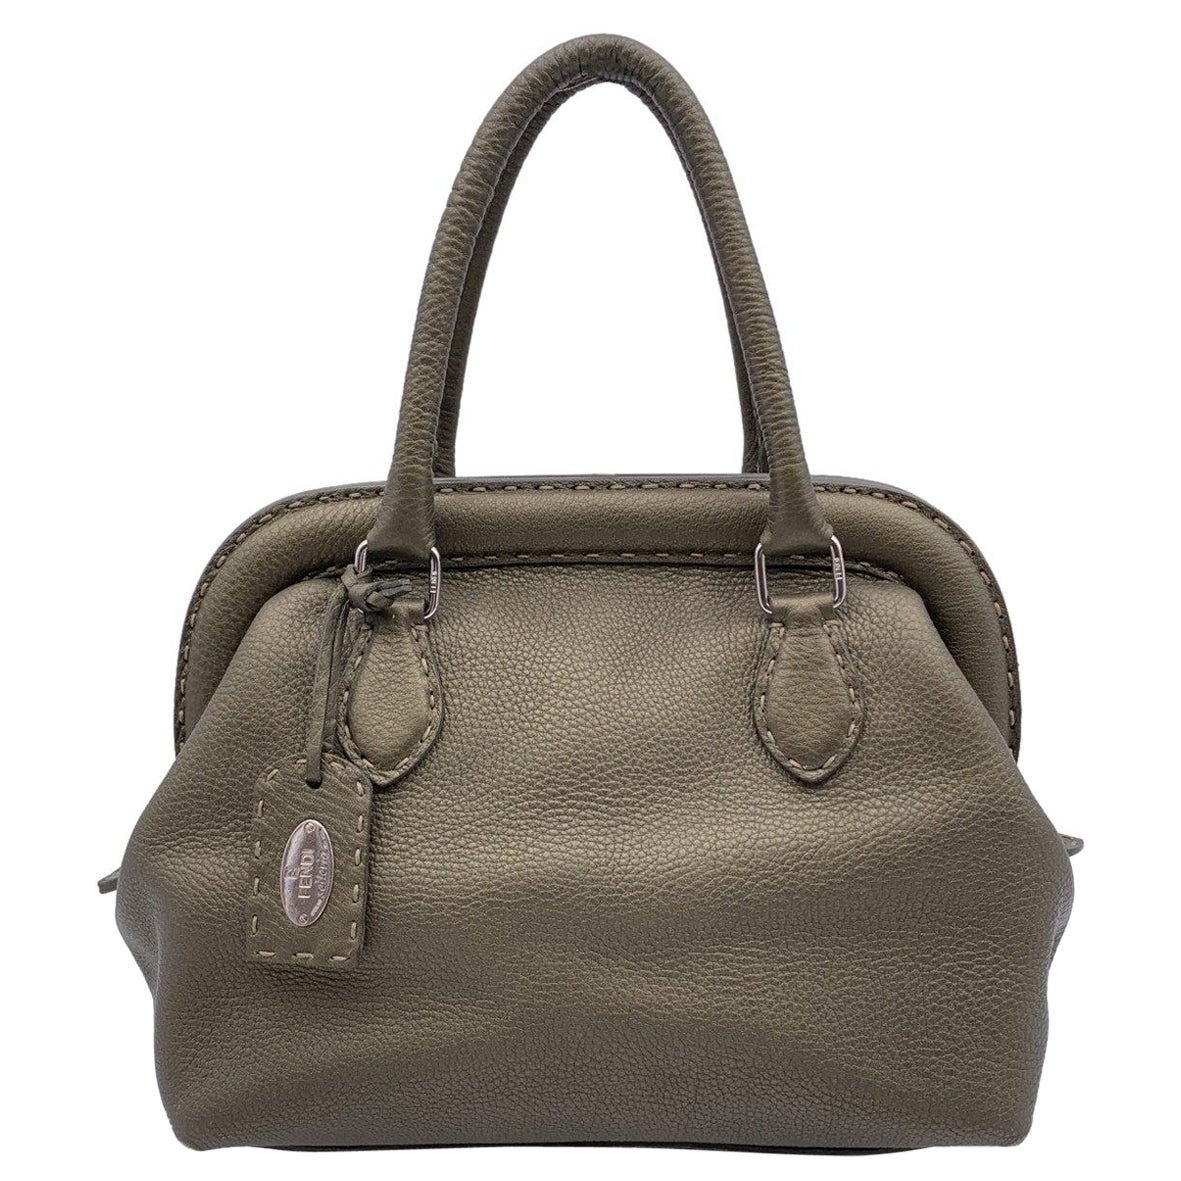 Fendi Selleria Military Green Leather Doctor Bag Handbag Satchel